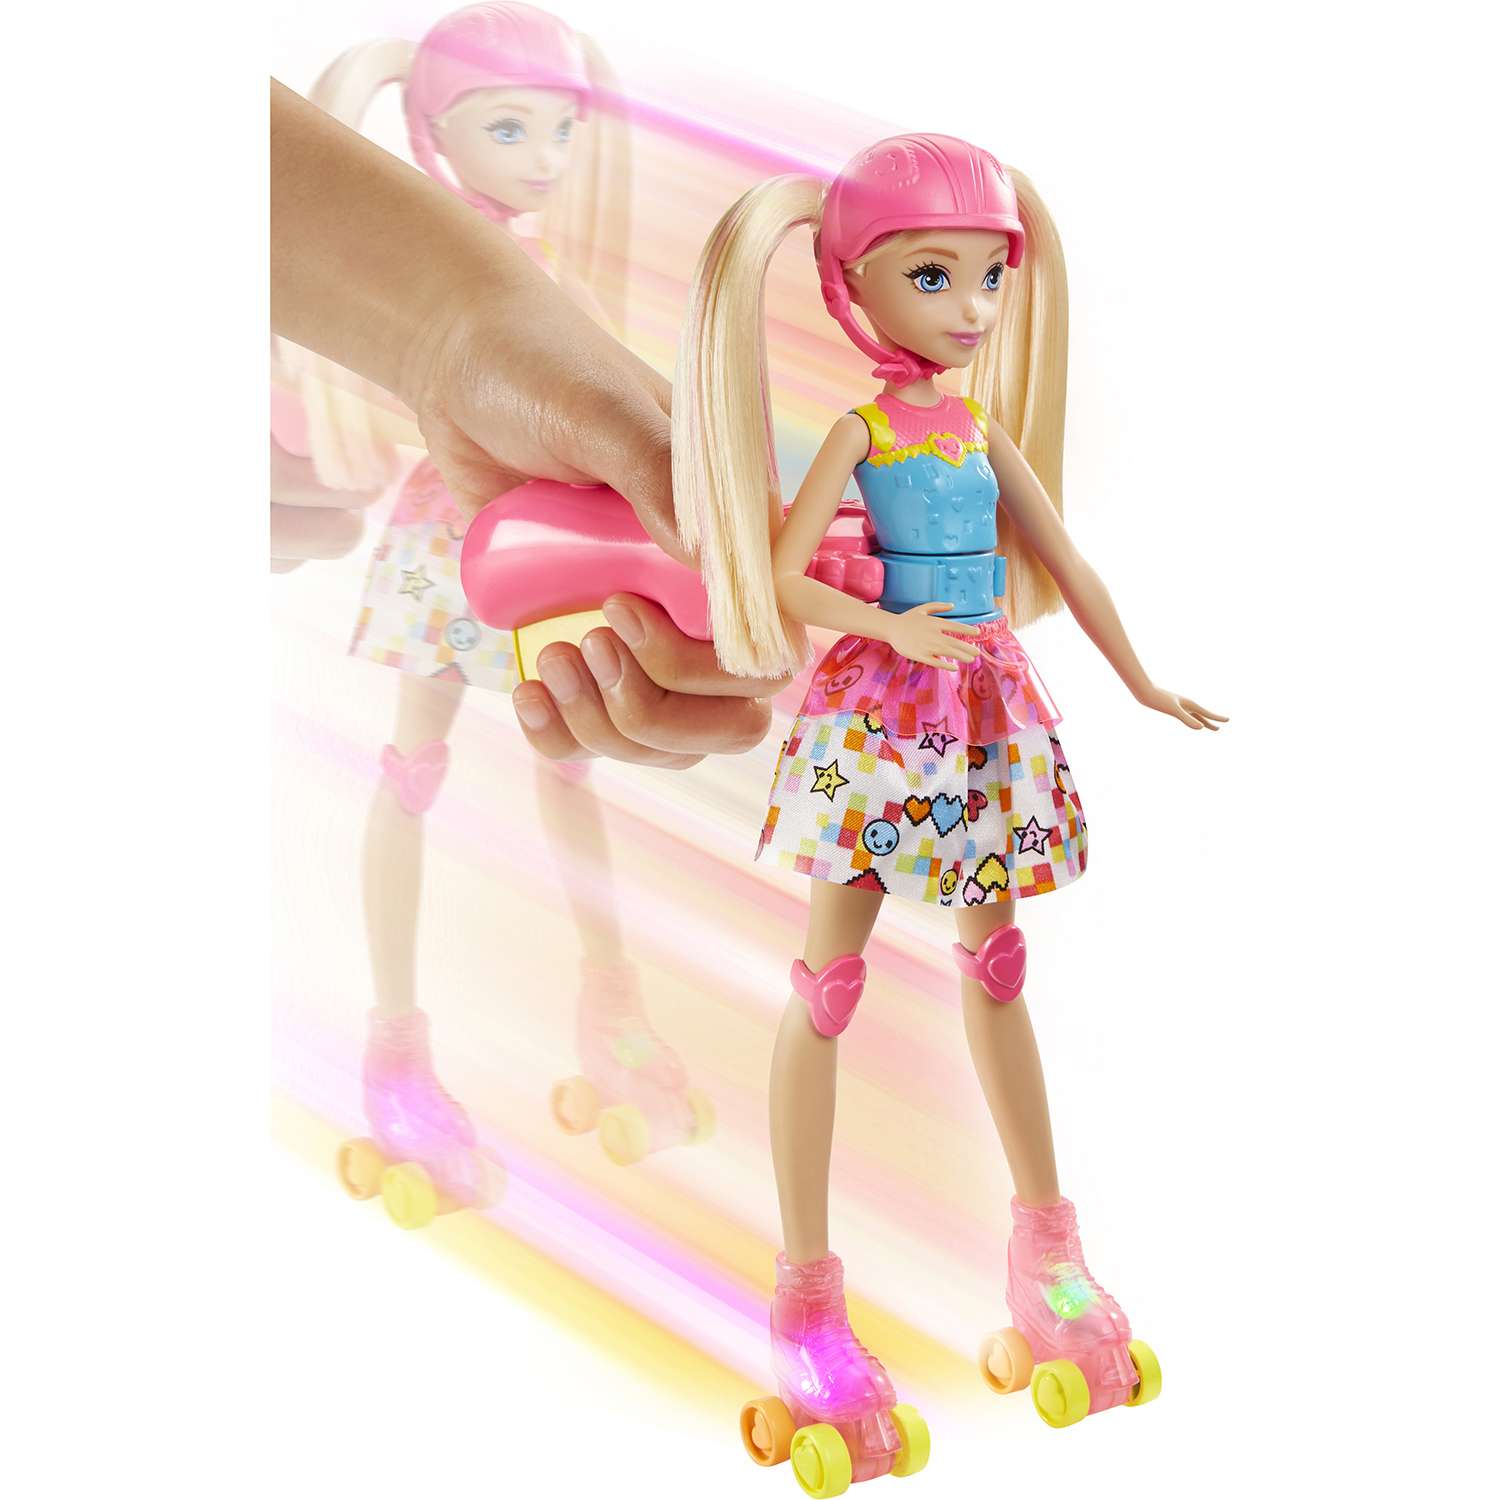 Куклы Барби виртуальный мир. Барби виртуальный мир Барби. Игрушки Барби виртуальный мир. Барби на роликах. Видео игра куклы